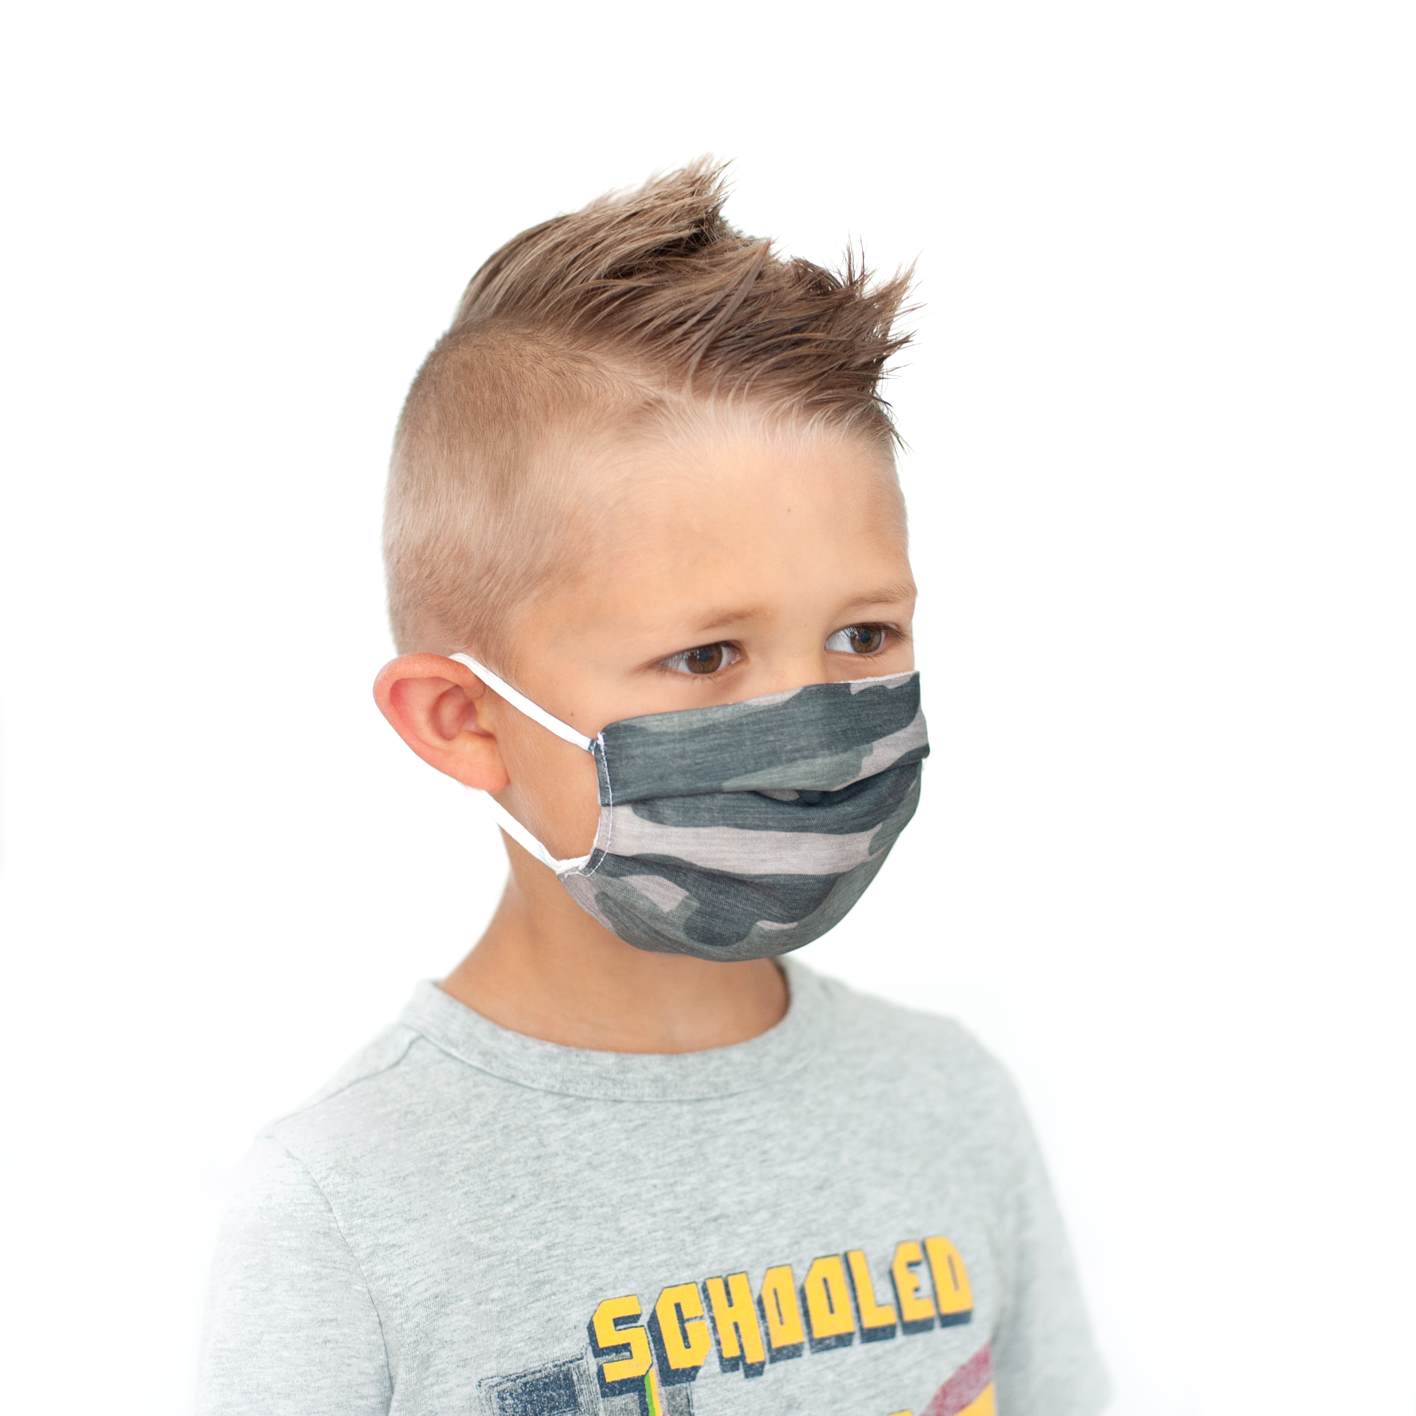 Personalized Face Masks - Camo & Tie Dye Designs